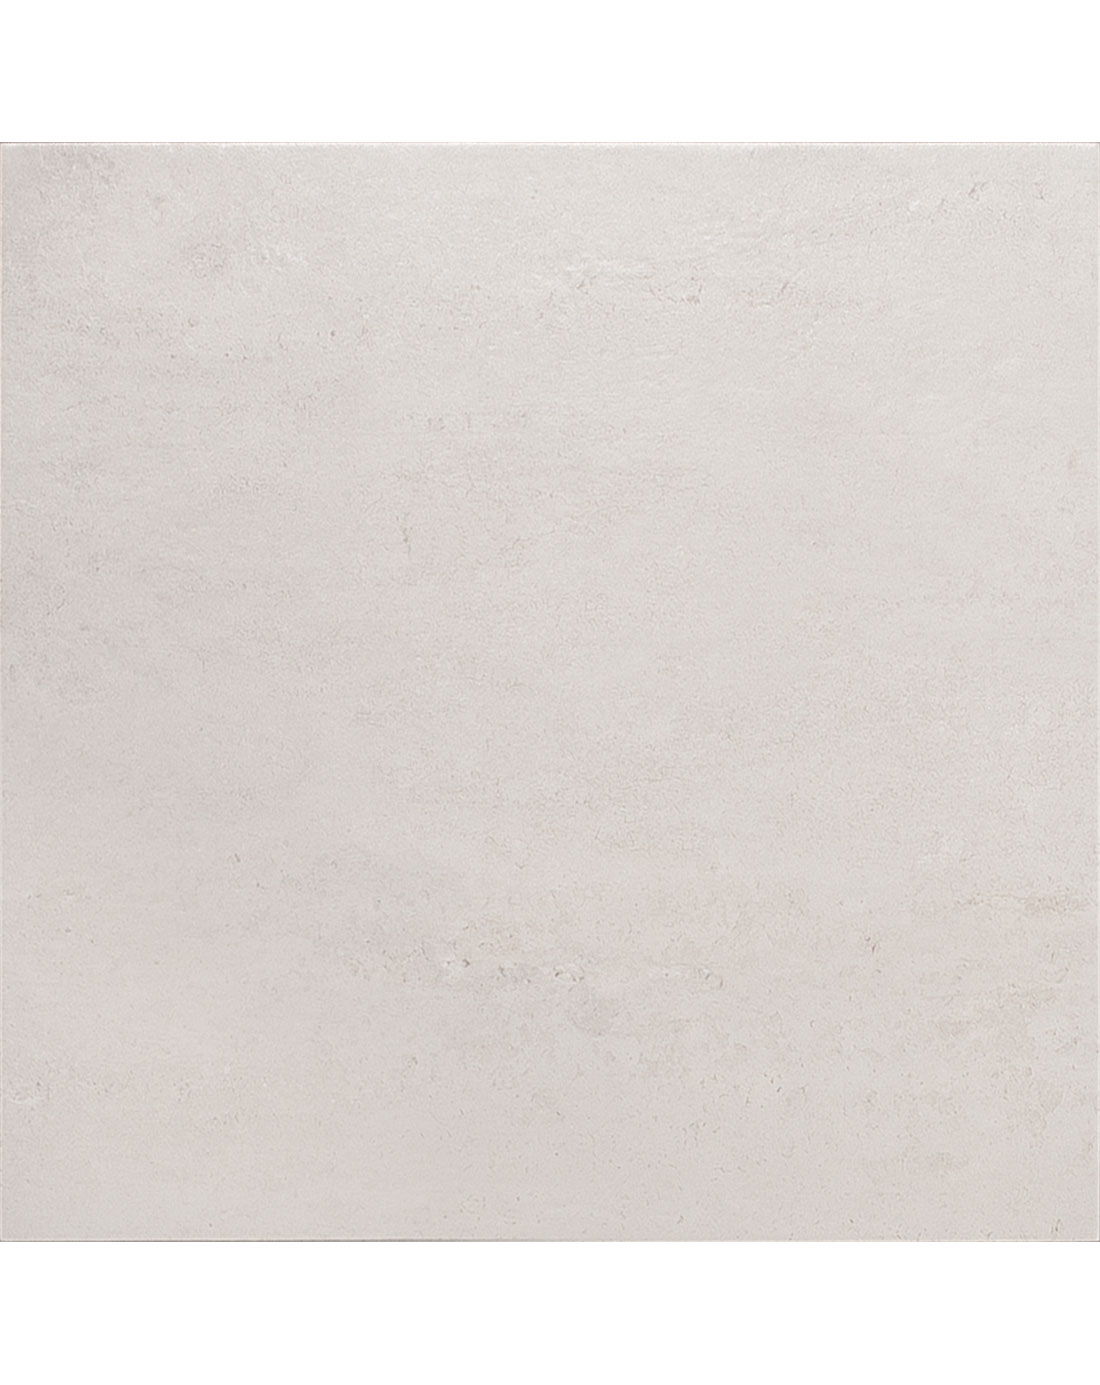 Concept Bianco Floor Tile - Bathroom Tiles Direct